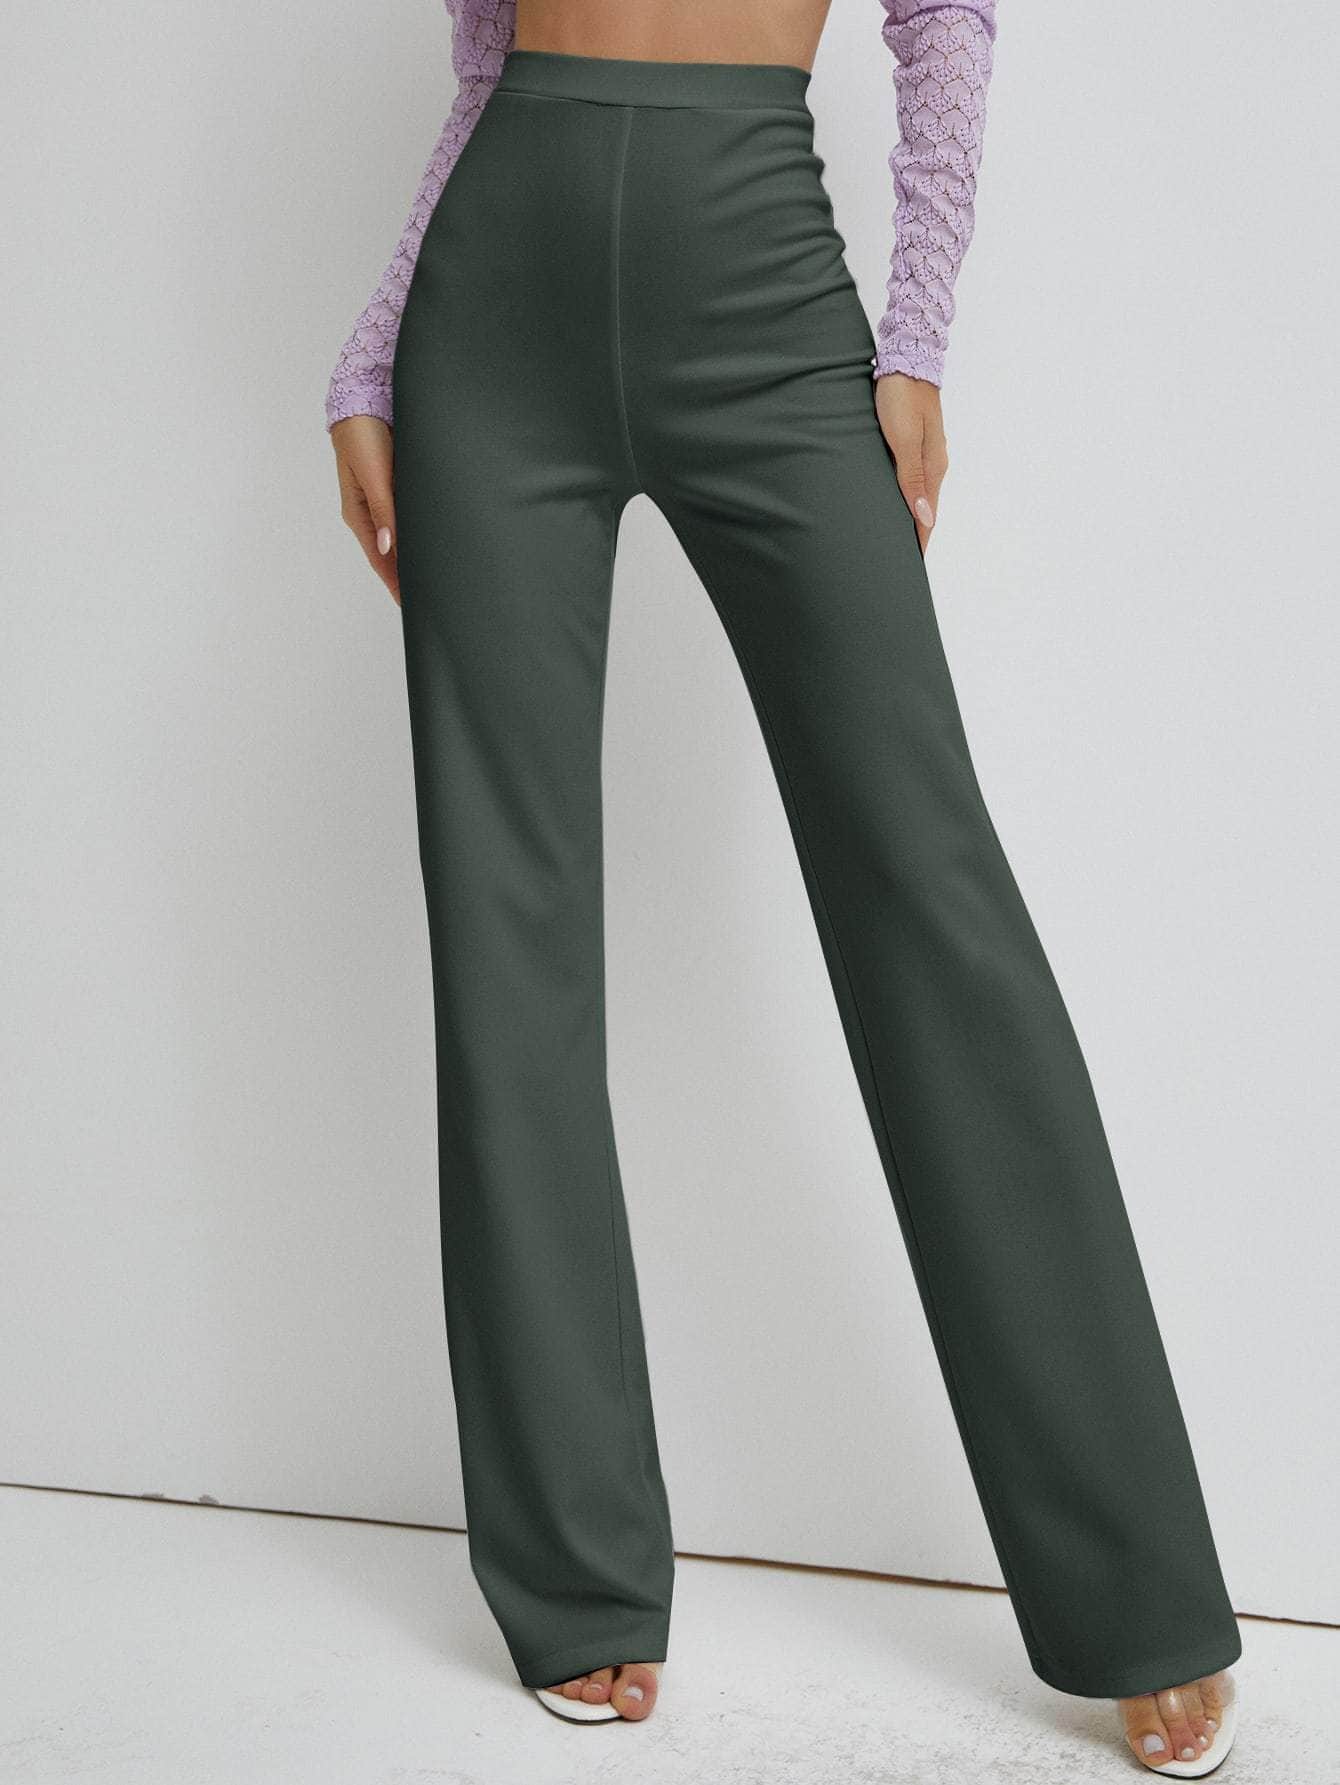 Muybonita.co Mujer/Pantalones/pantaloneselegantes3 Verde Oscuro / S Pantalones rectos unicolor de cintura alta